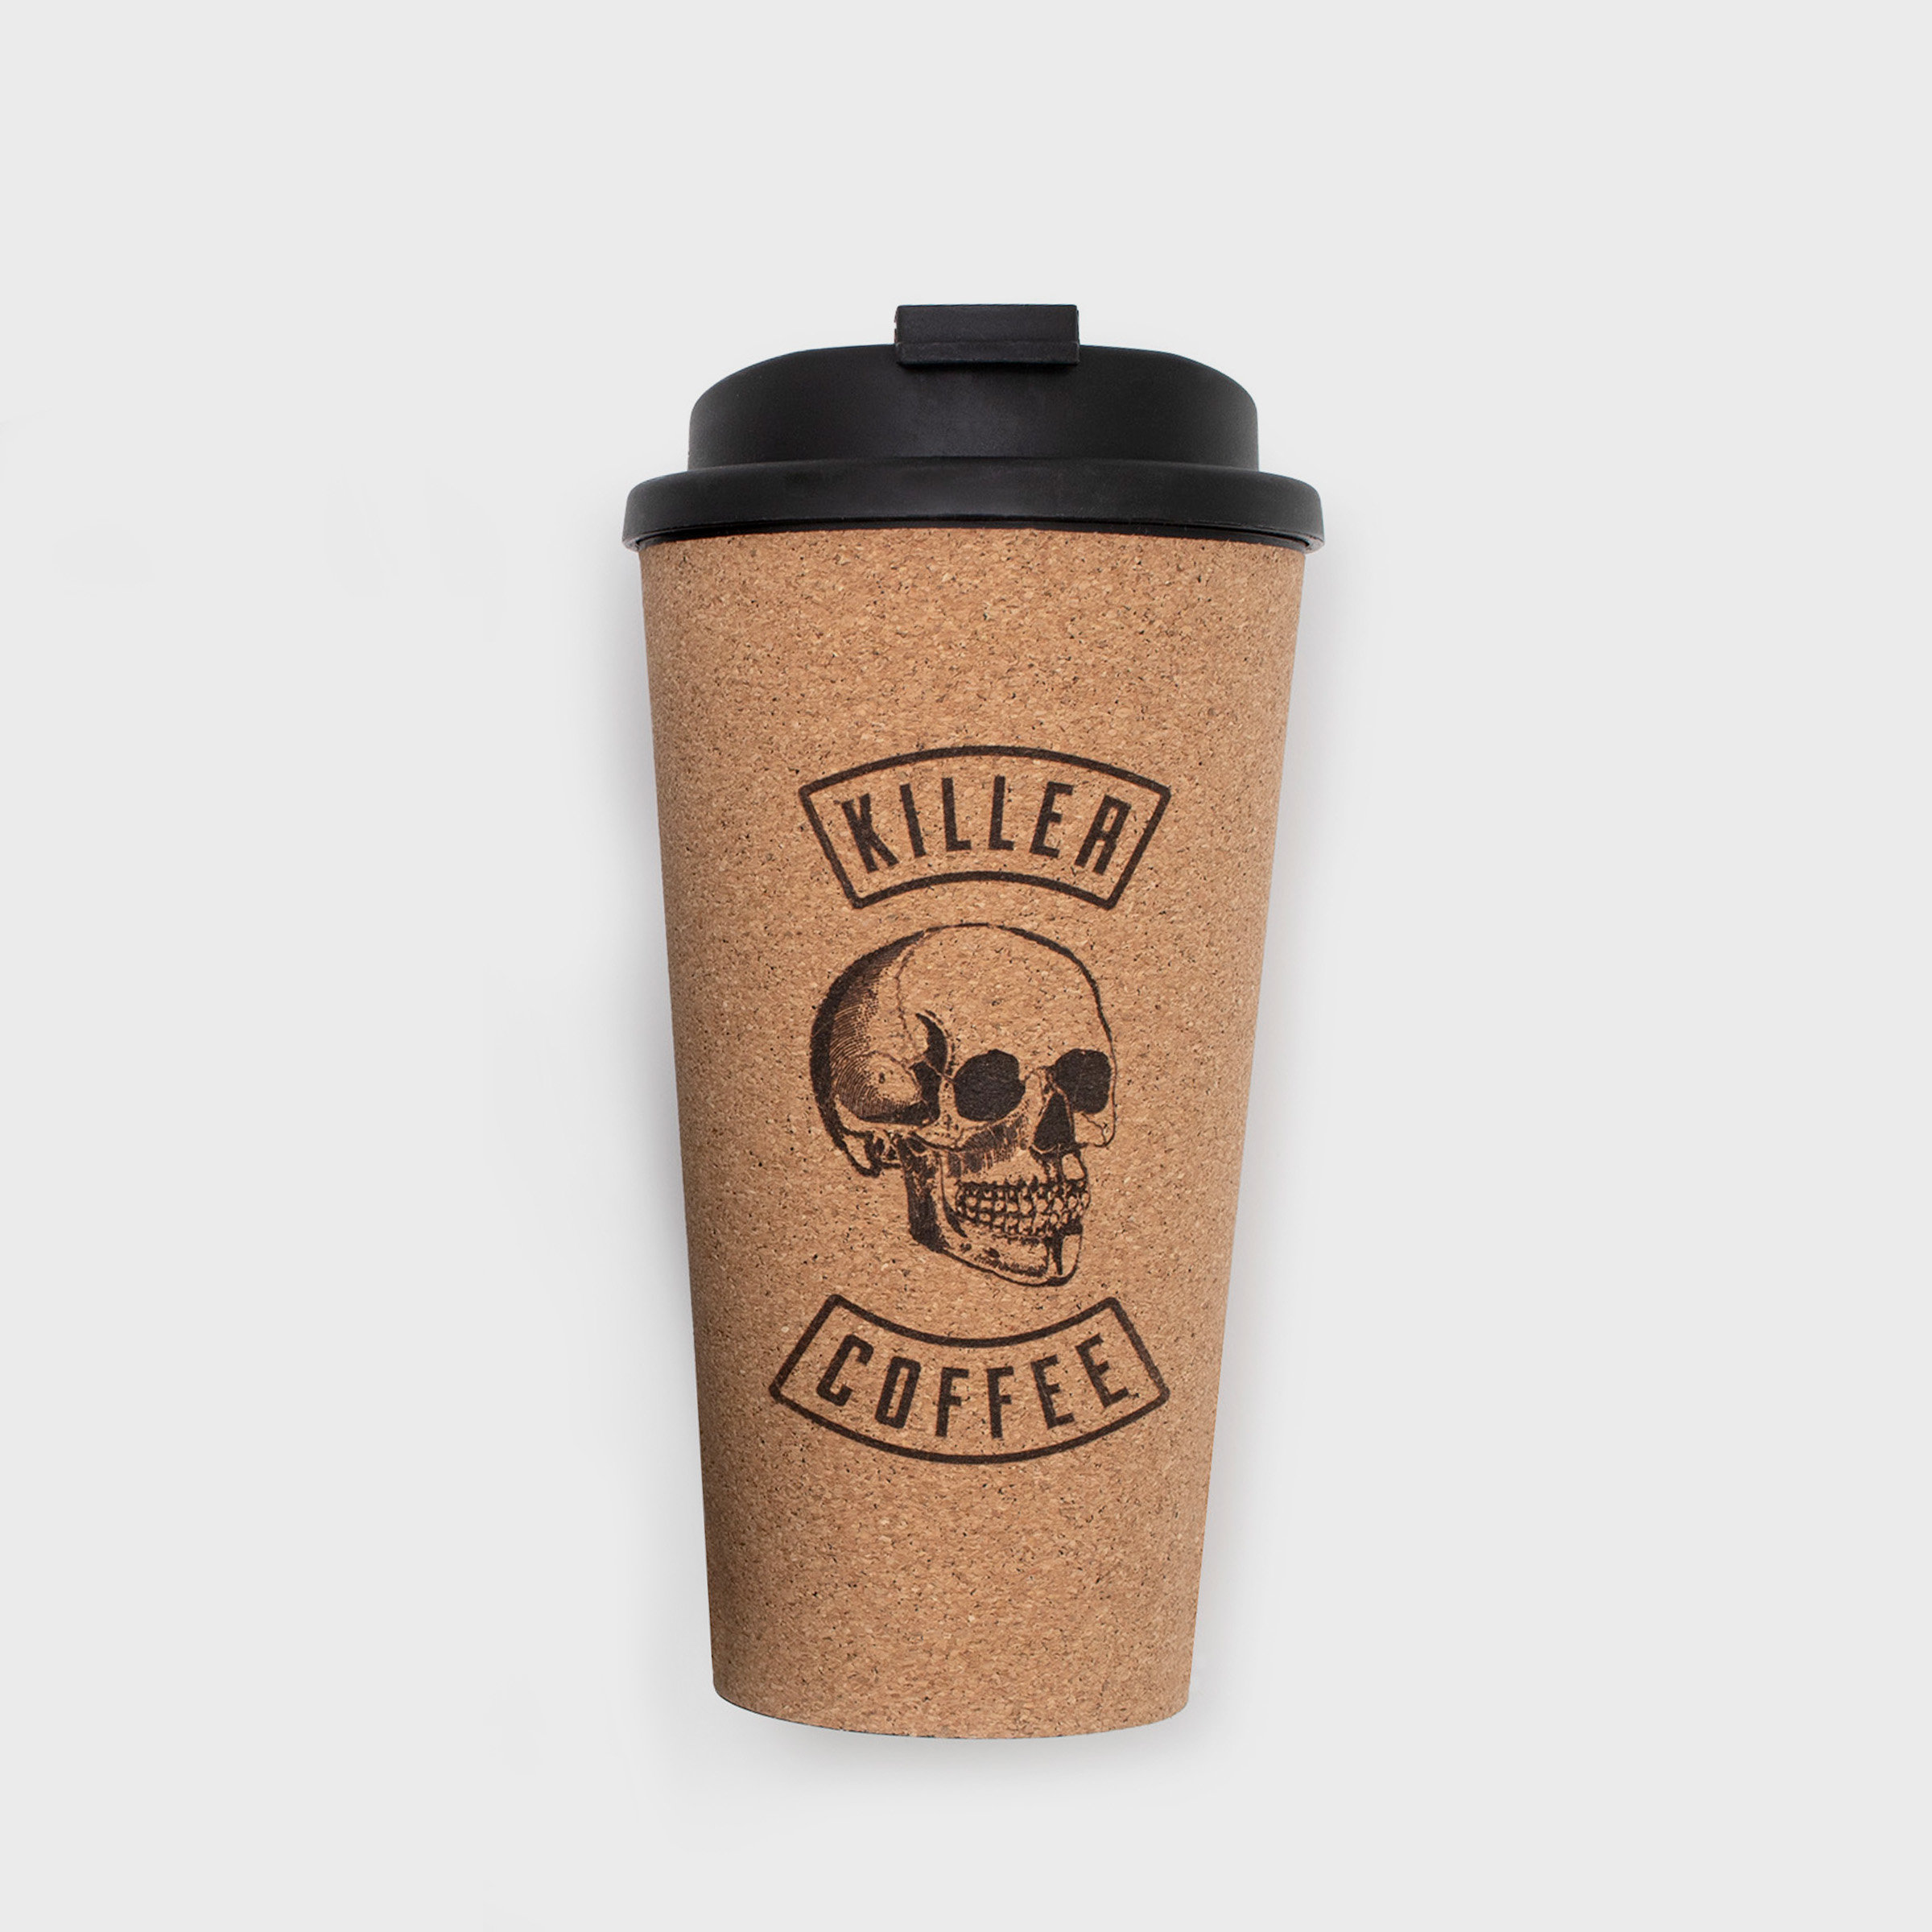 Killer Coffee Cup